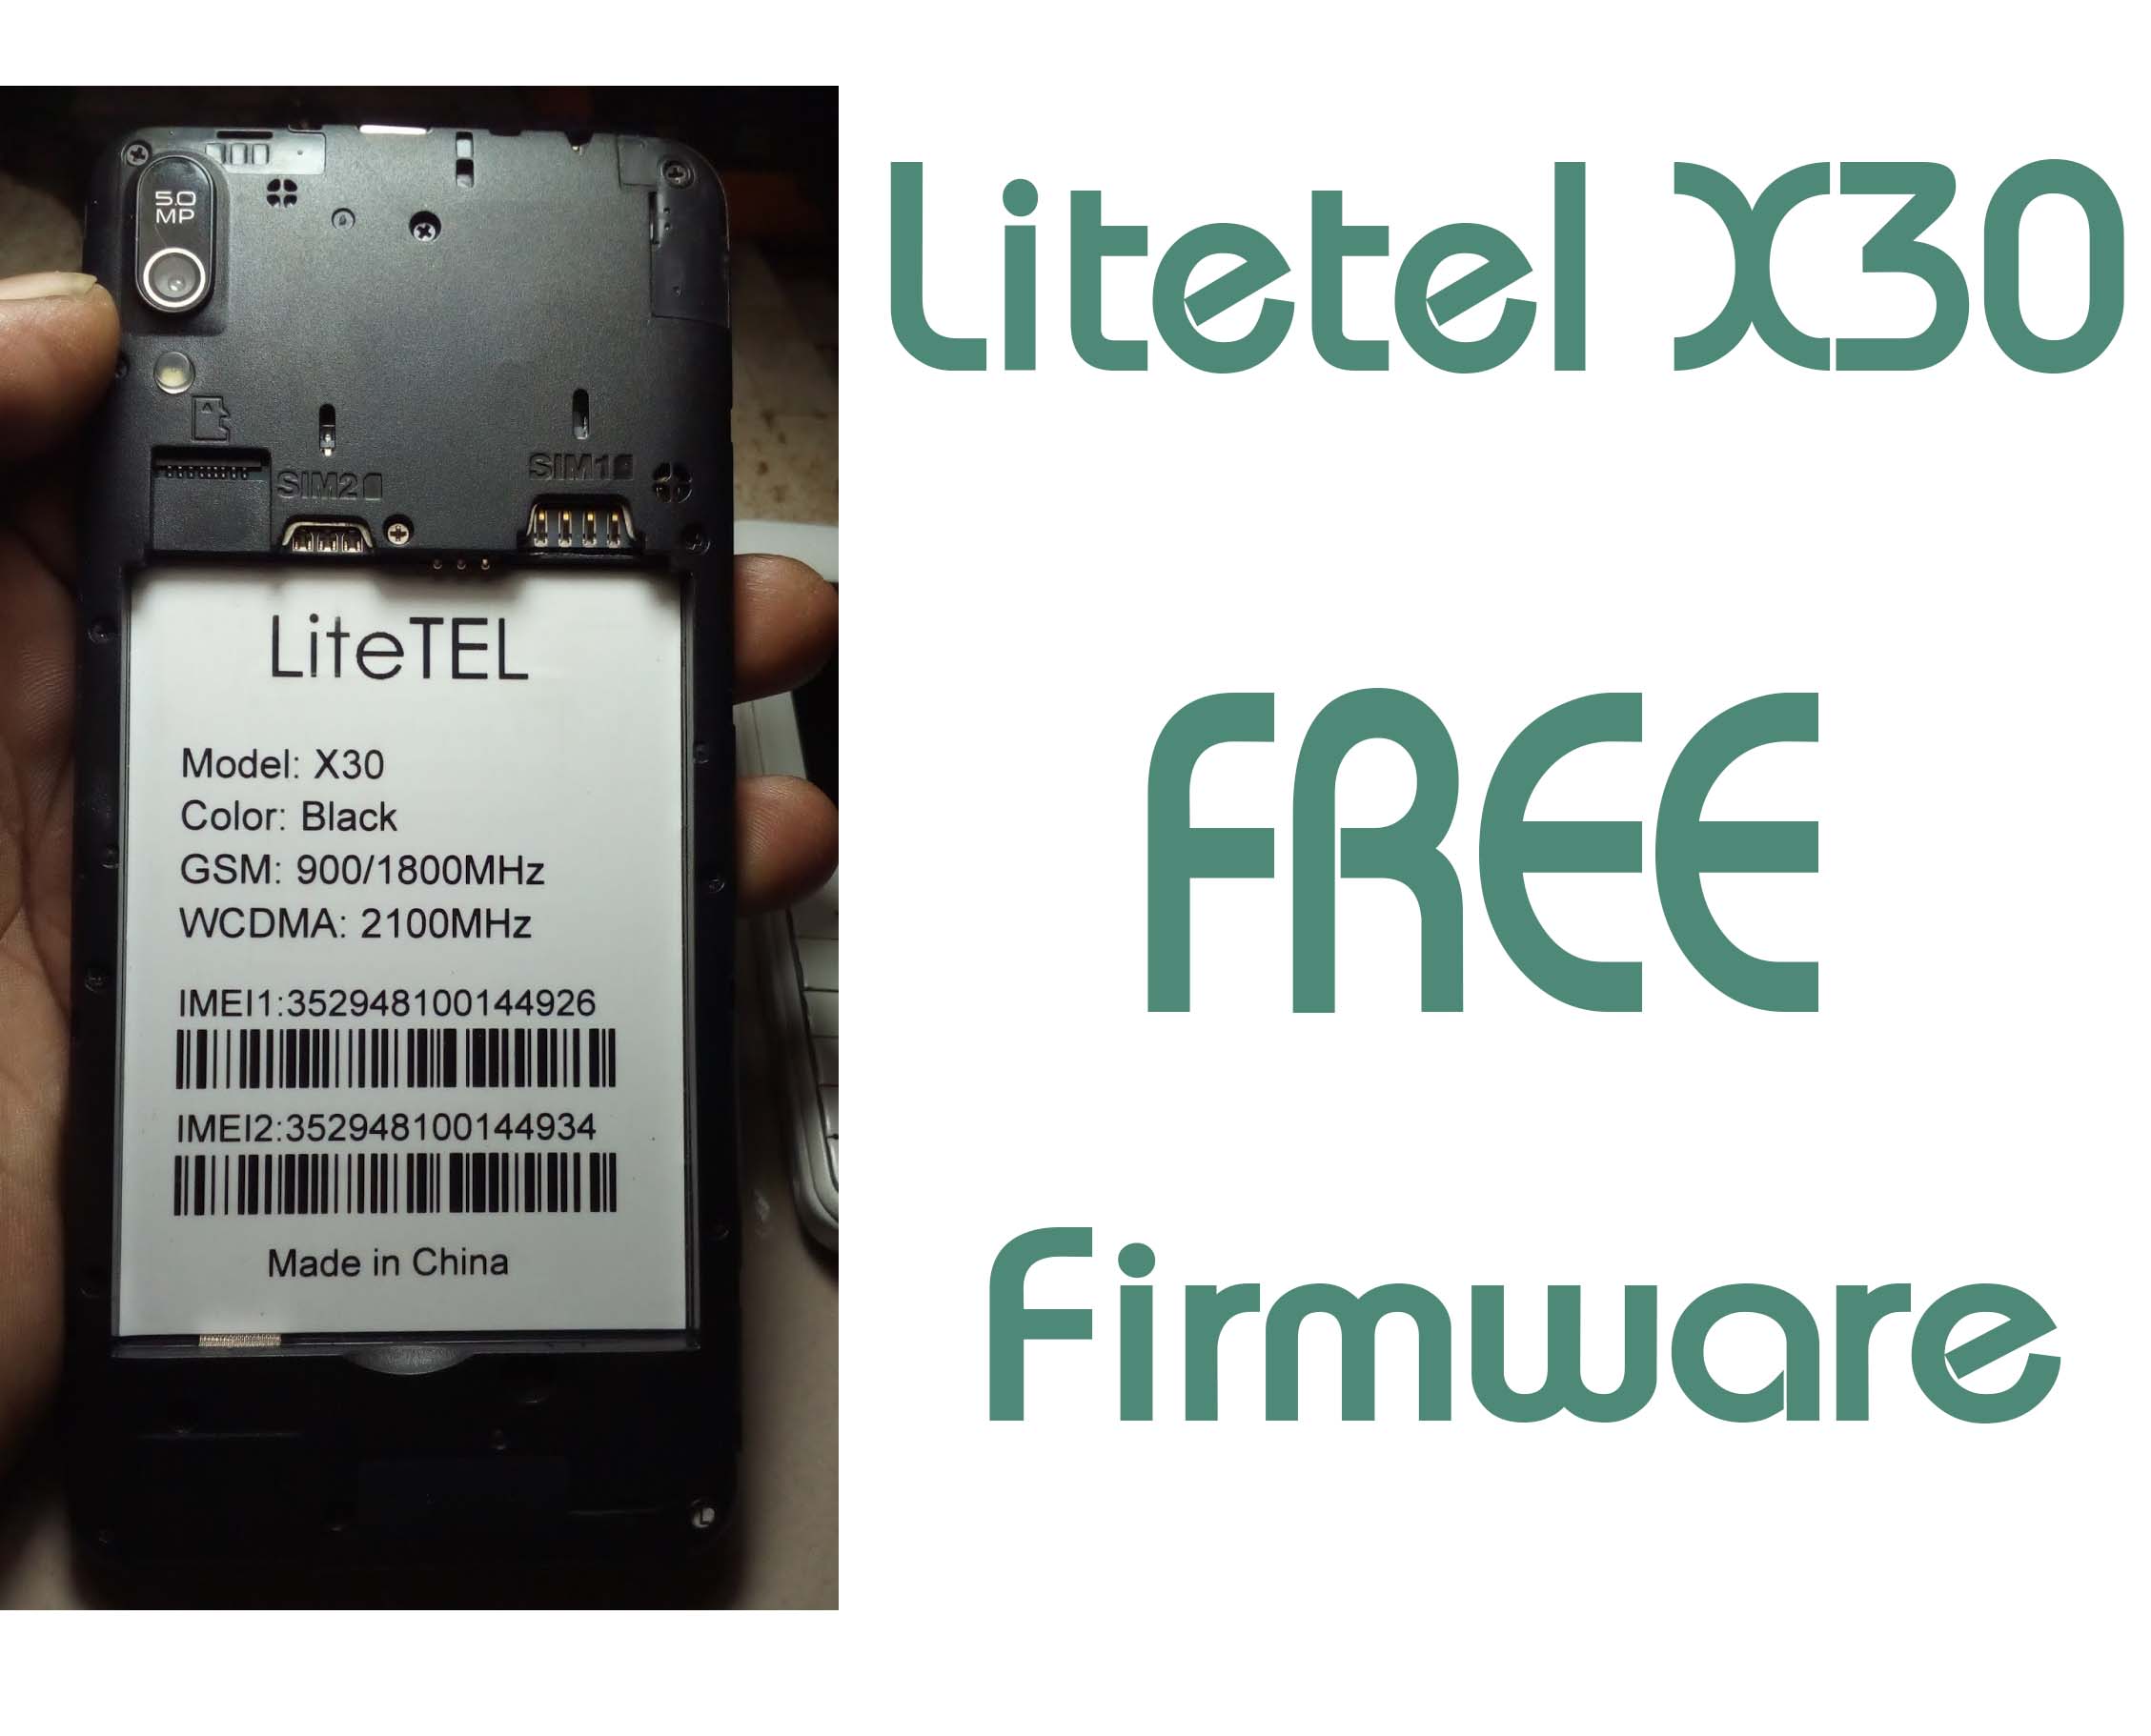 Litetel X30 Flash File (Firmware) Free Download